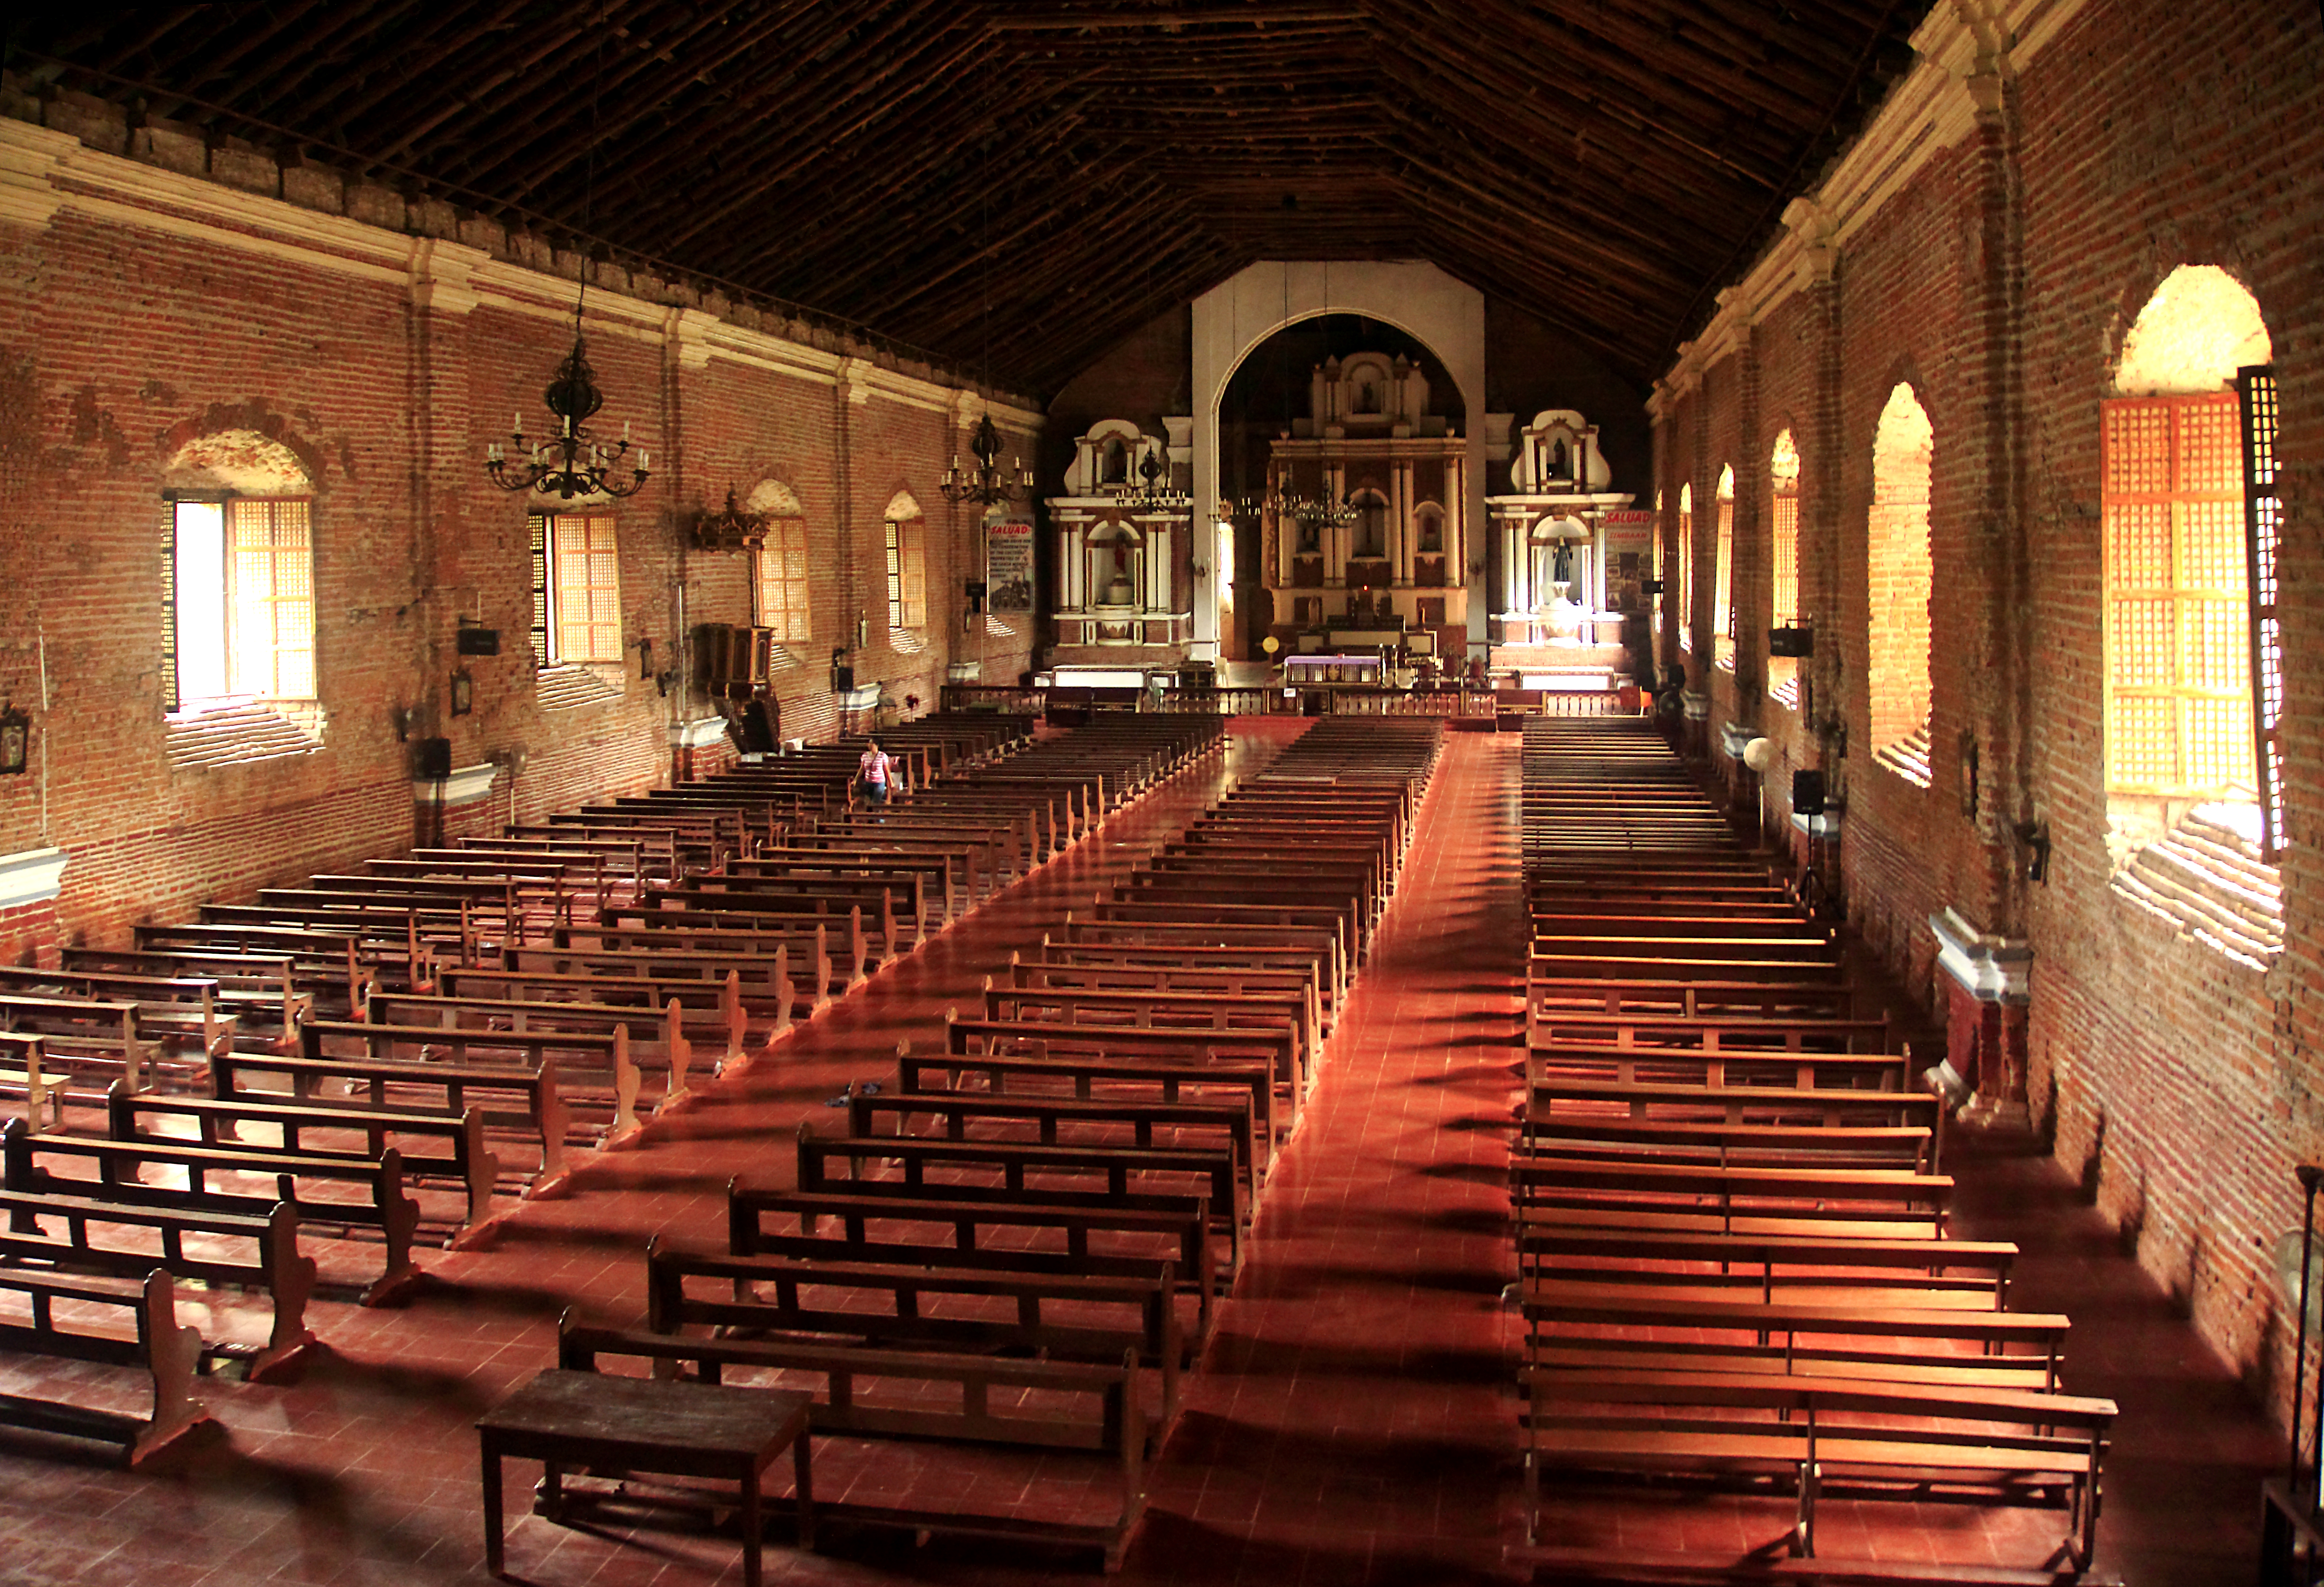 File:The halls of sarrat church.jpg - Wikimedia Commons